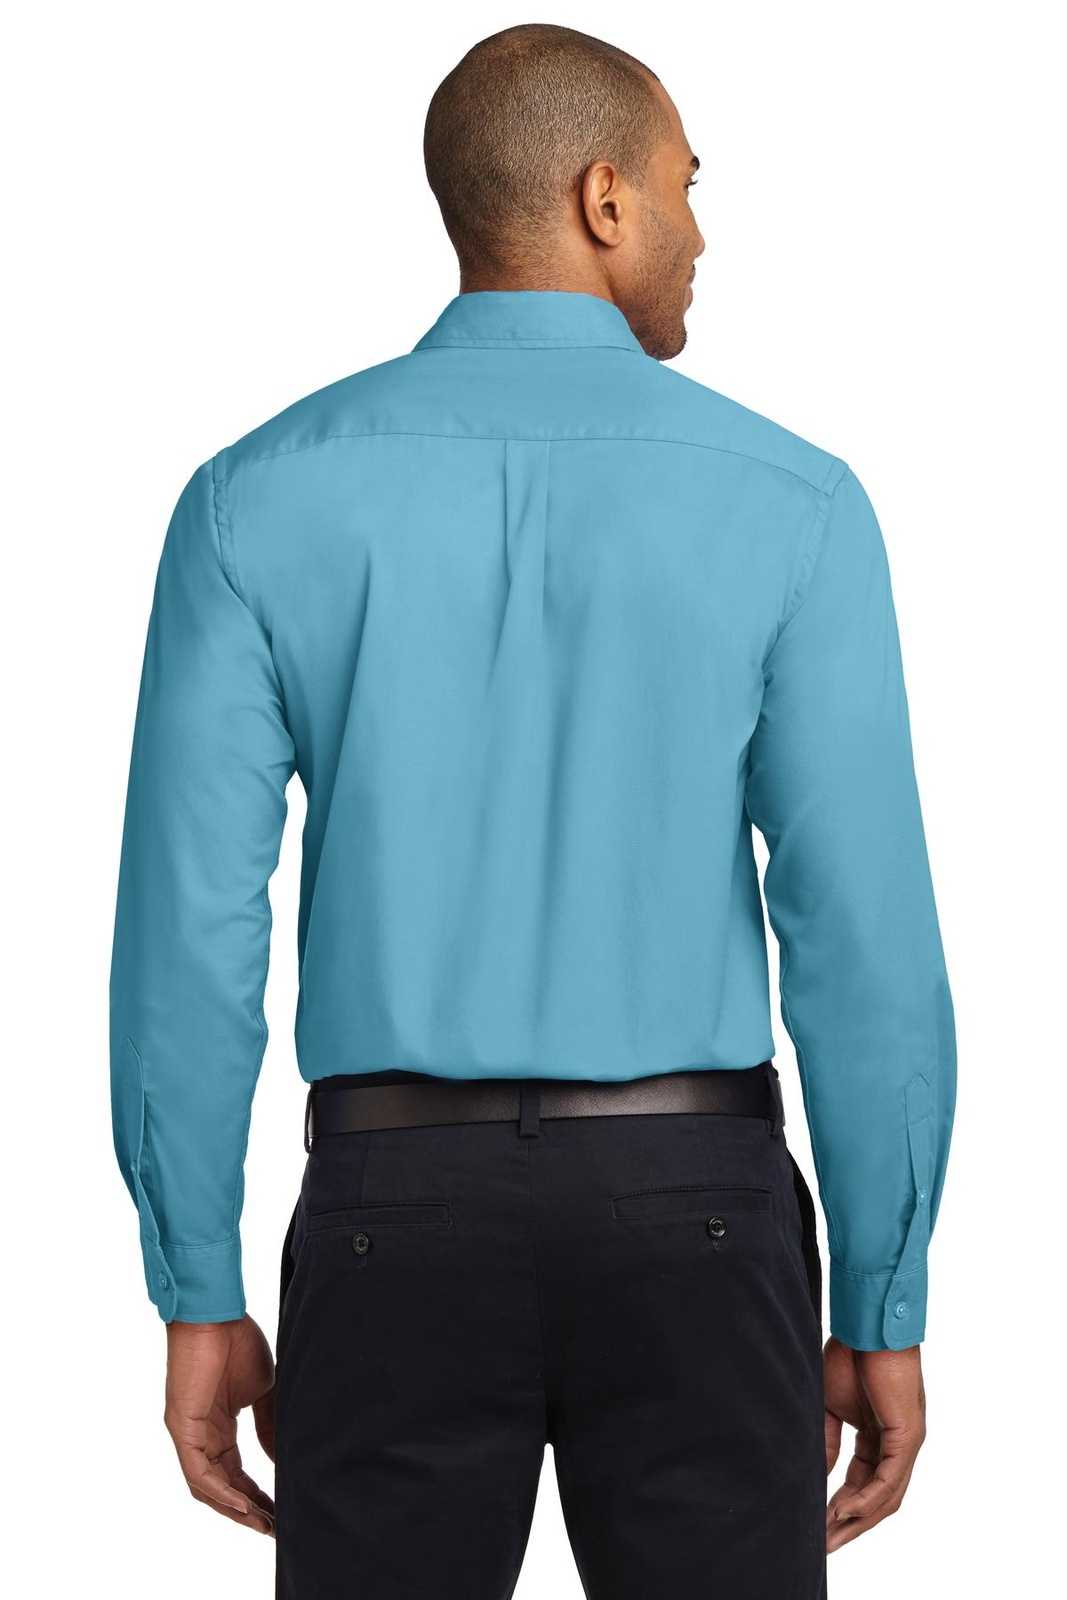 Port Authority S608 Long Sleeve Easy Care Shirt - Maui Blue - HIT a Double - 2